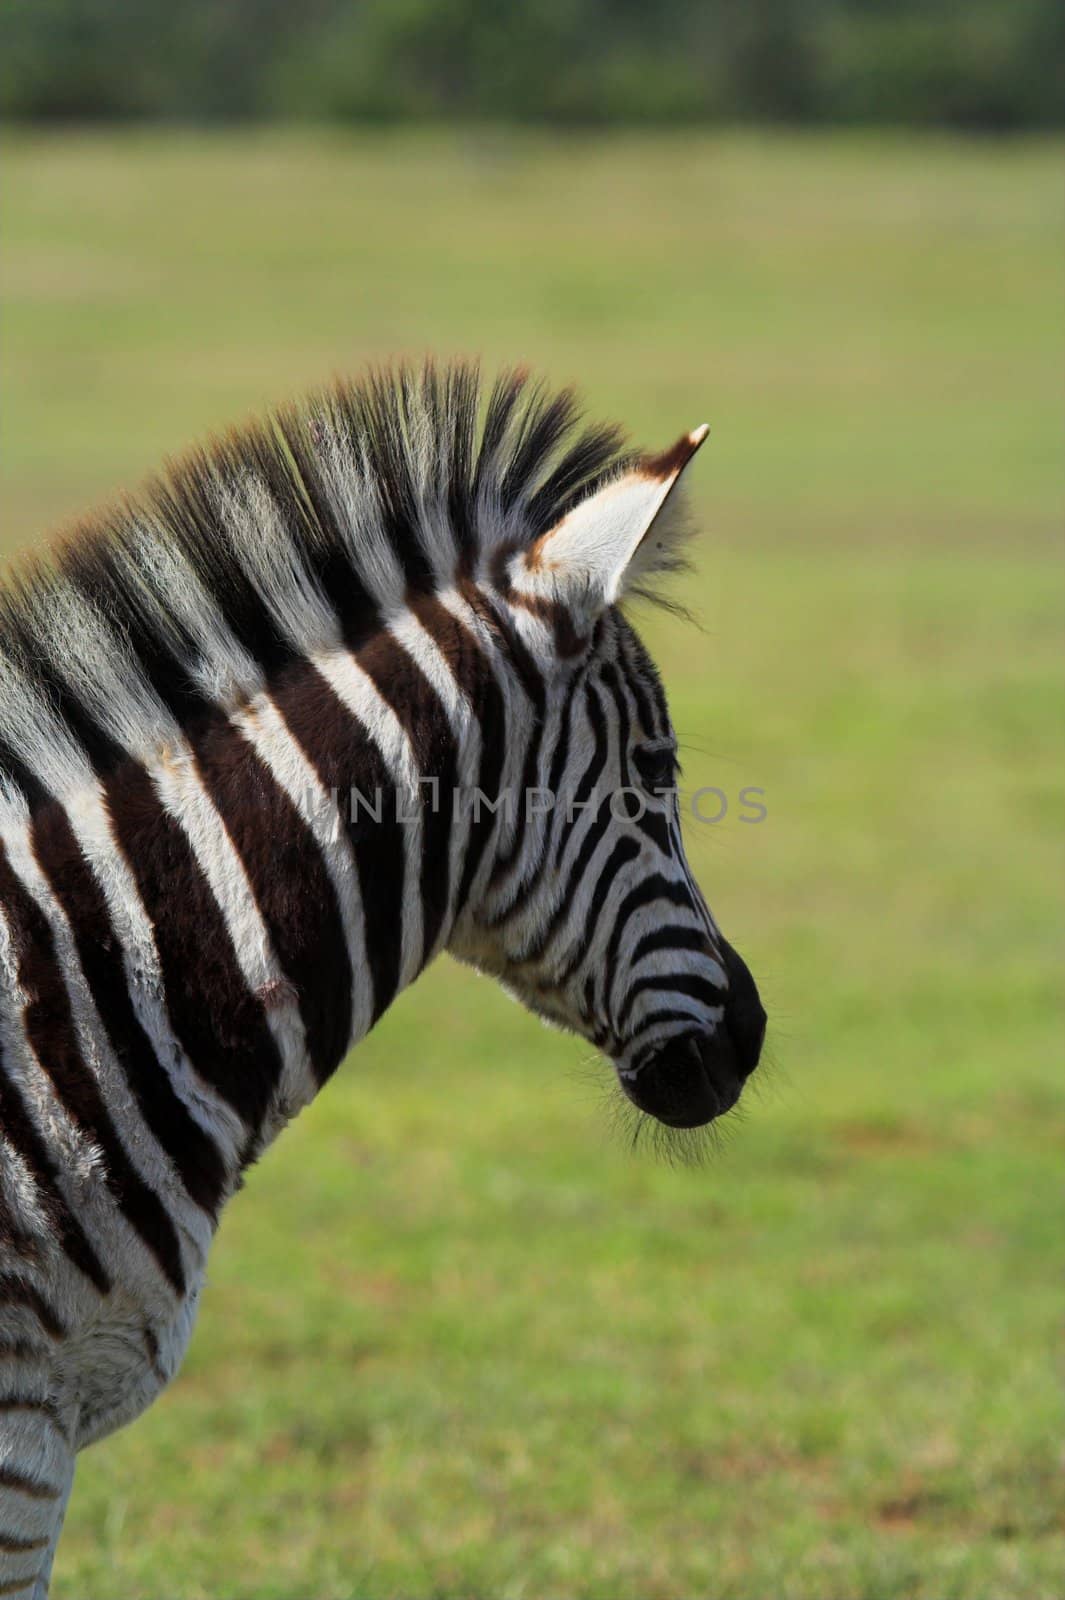 Zebra close up by nightowlza